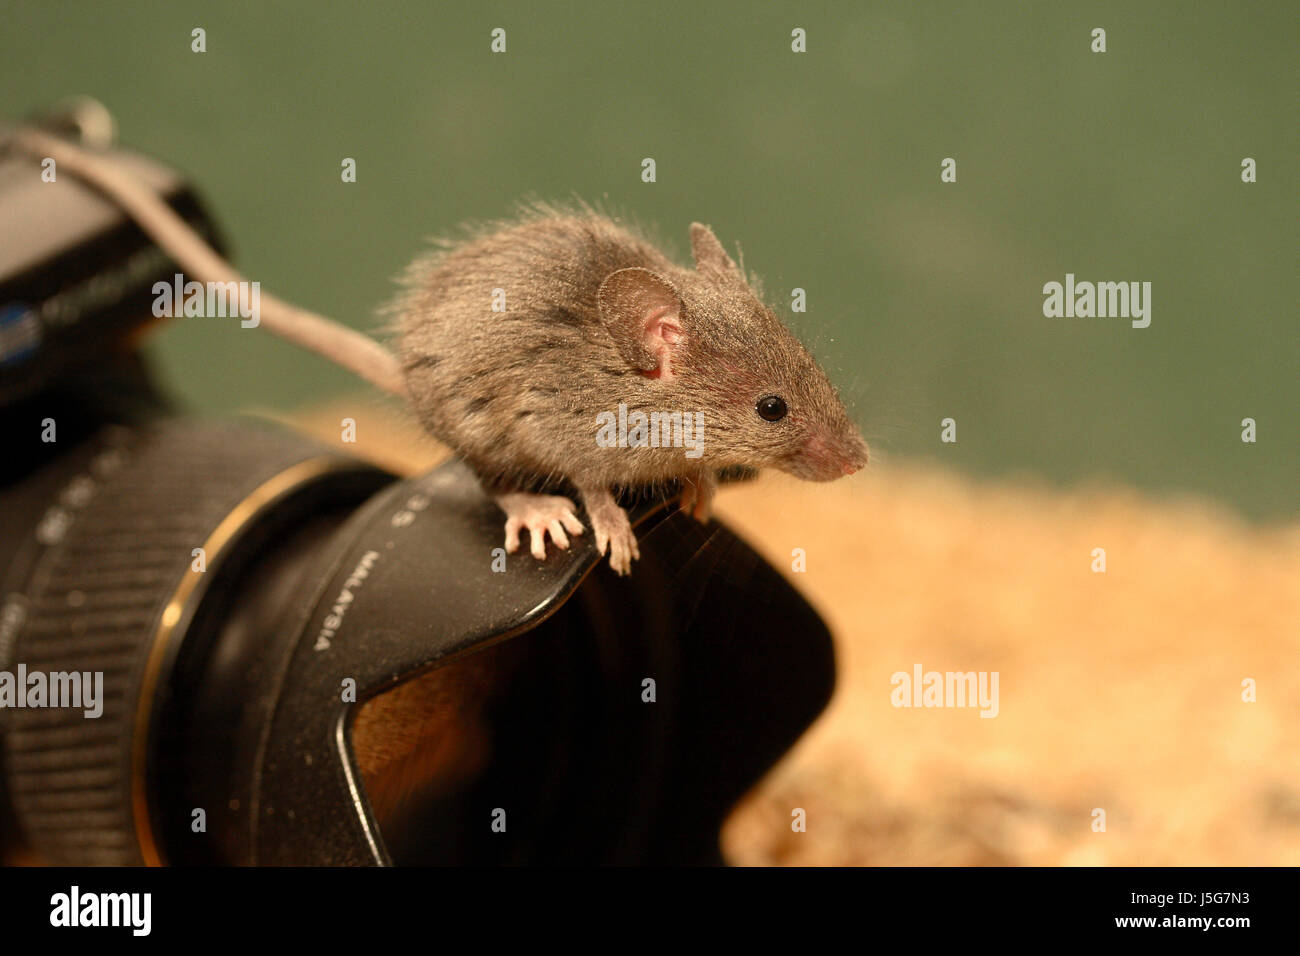 Technik Tiere Nager Foto Kamera Maus Snapshot Gnawers Mäuse Sonnenblende  Stockfotografie - Alamy